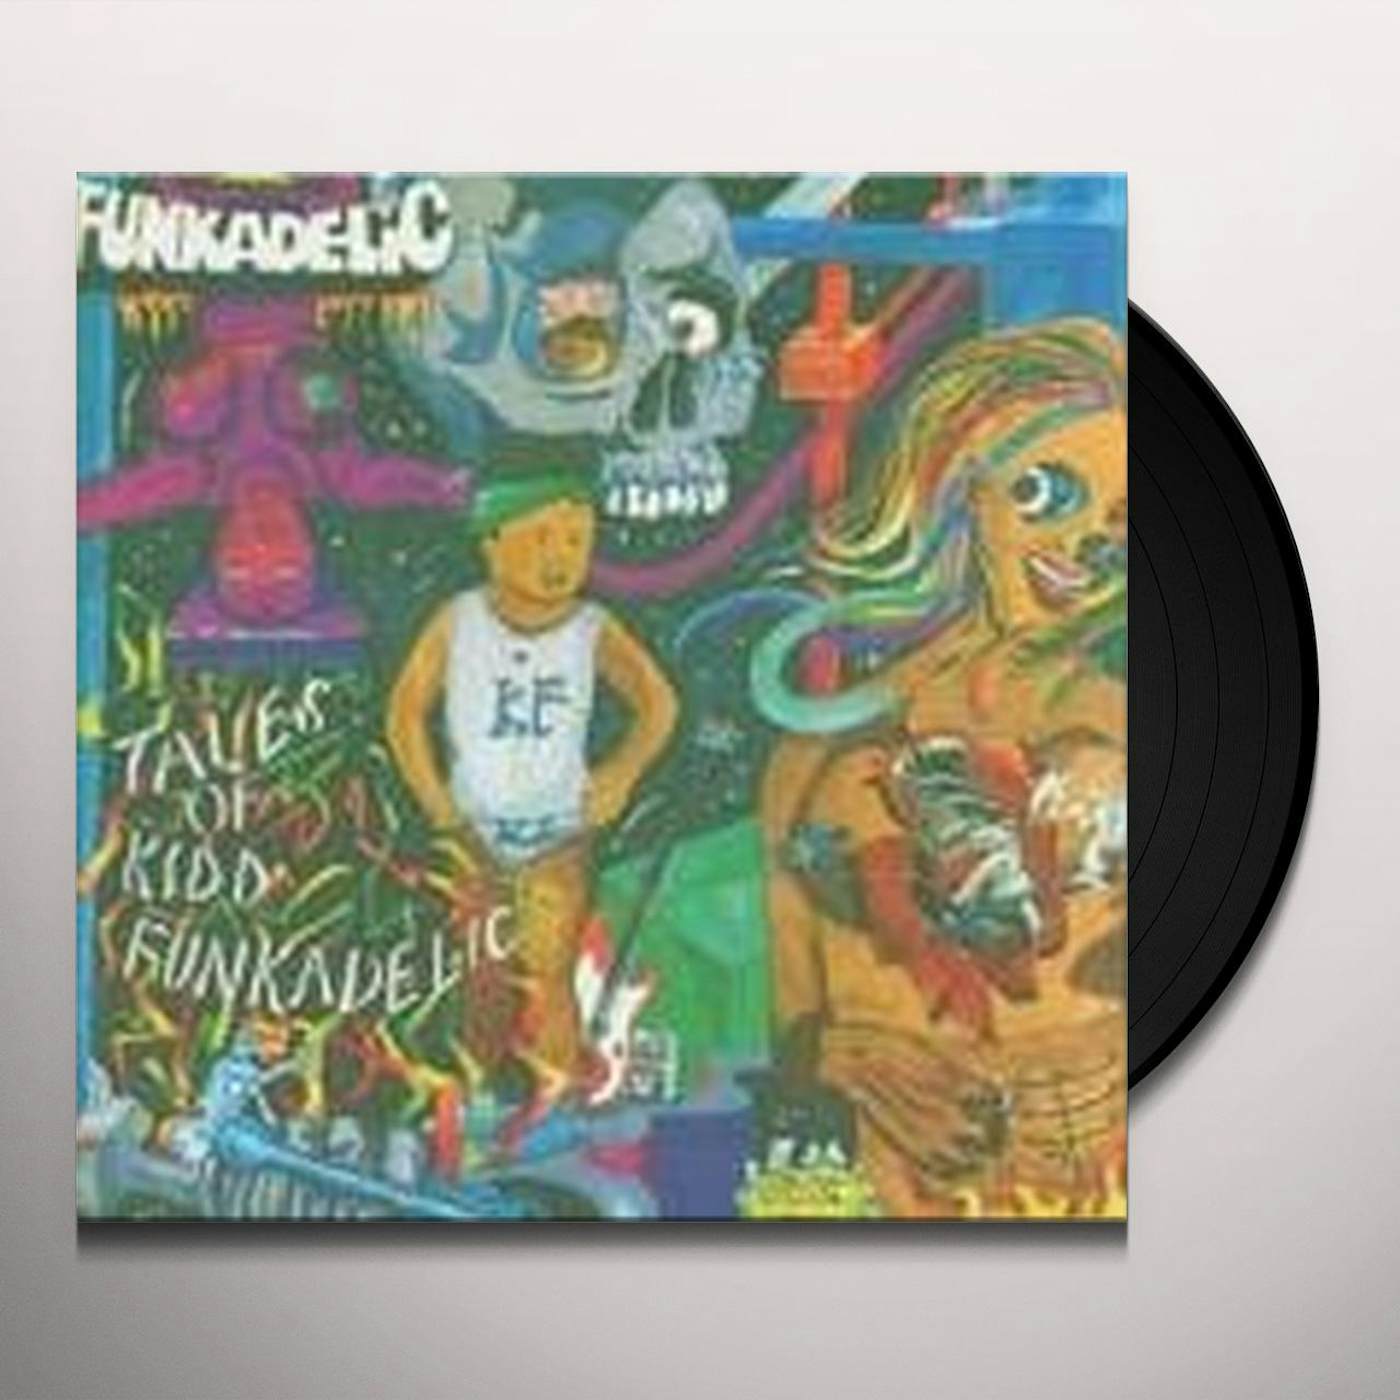 Tales of Kidd Funkadelic Vinyl Record